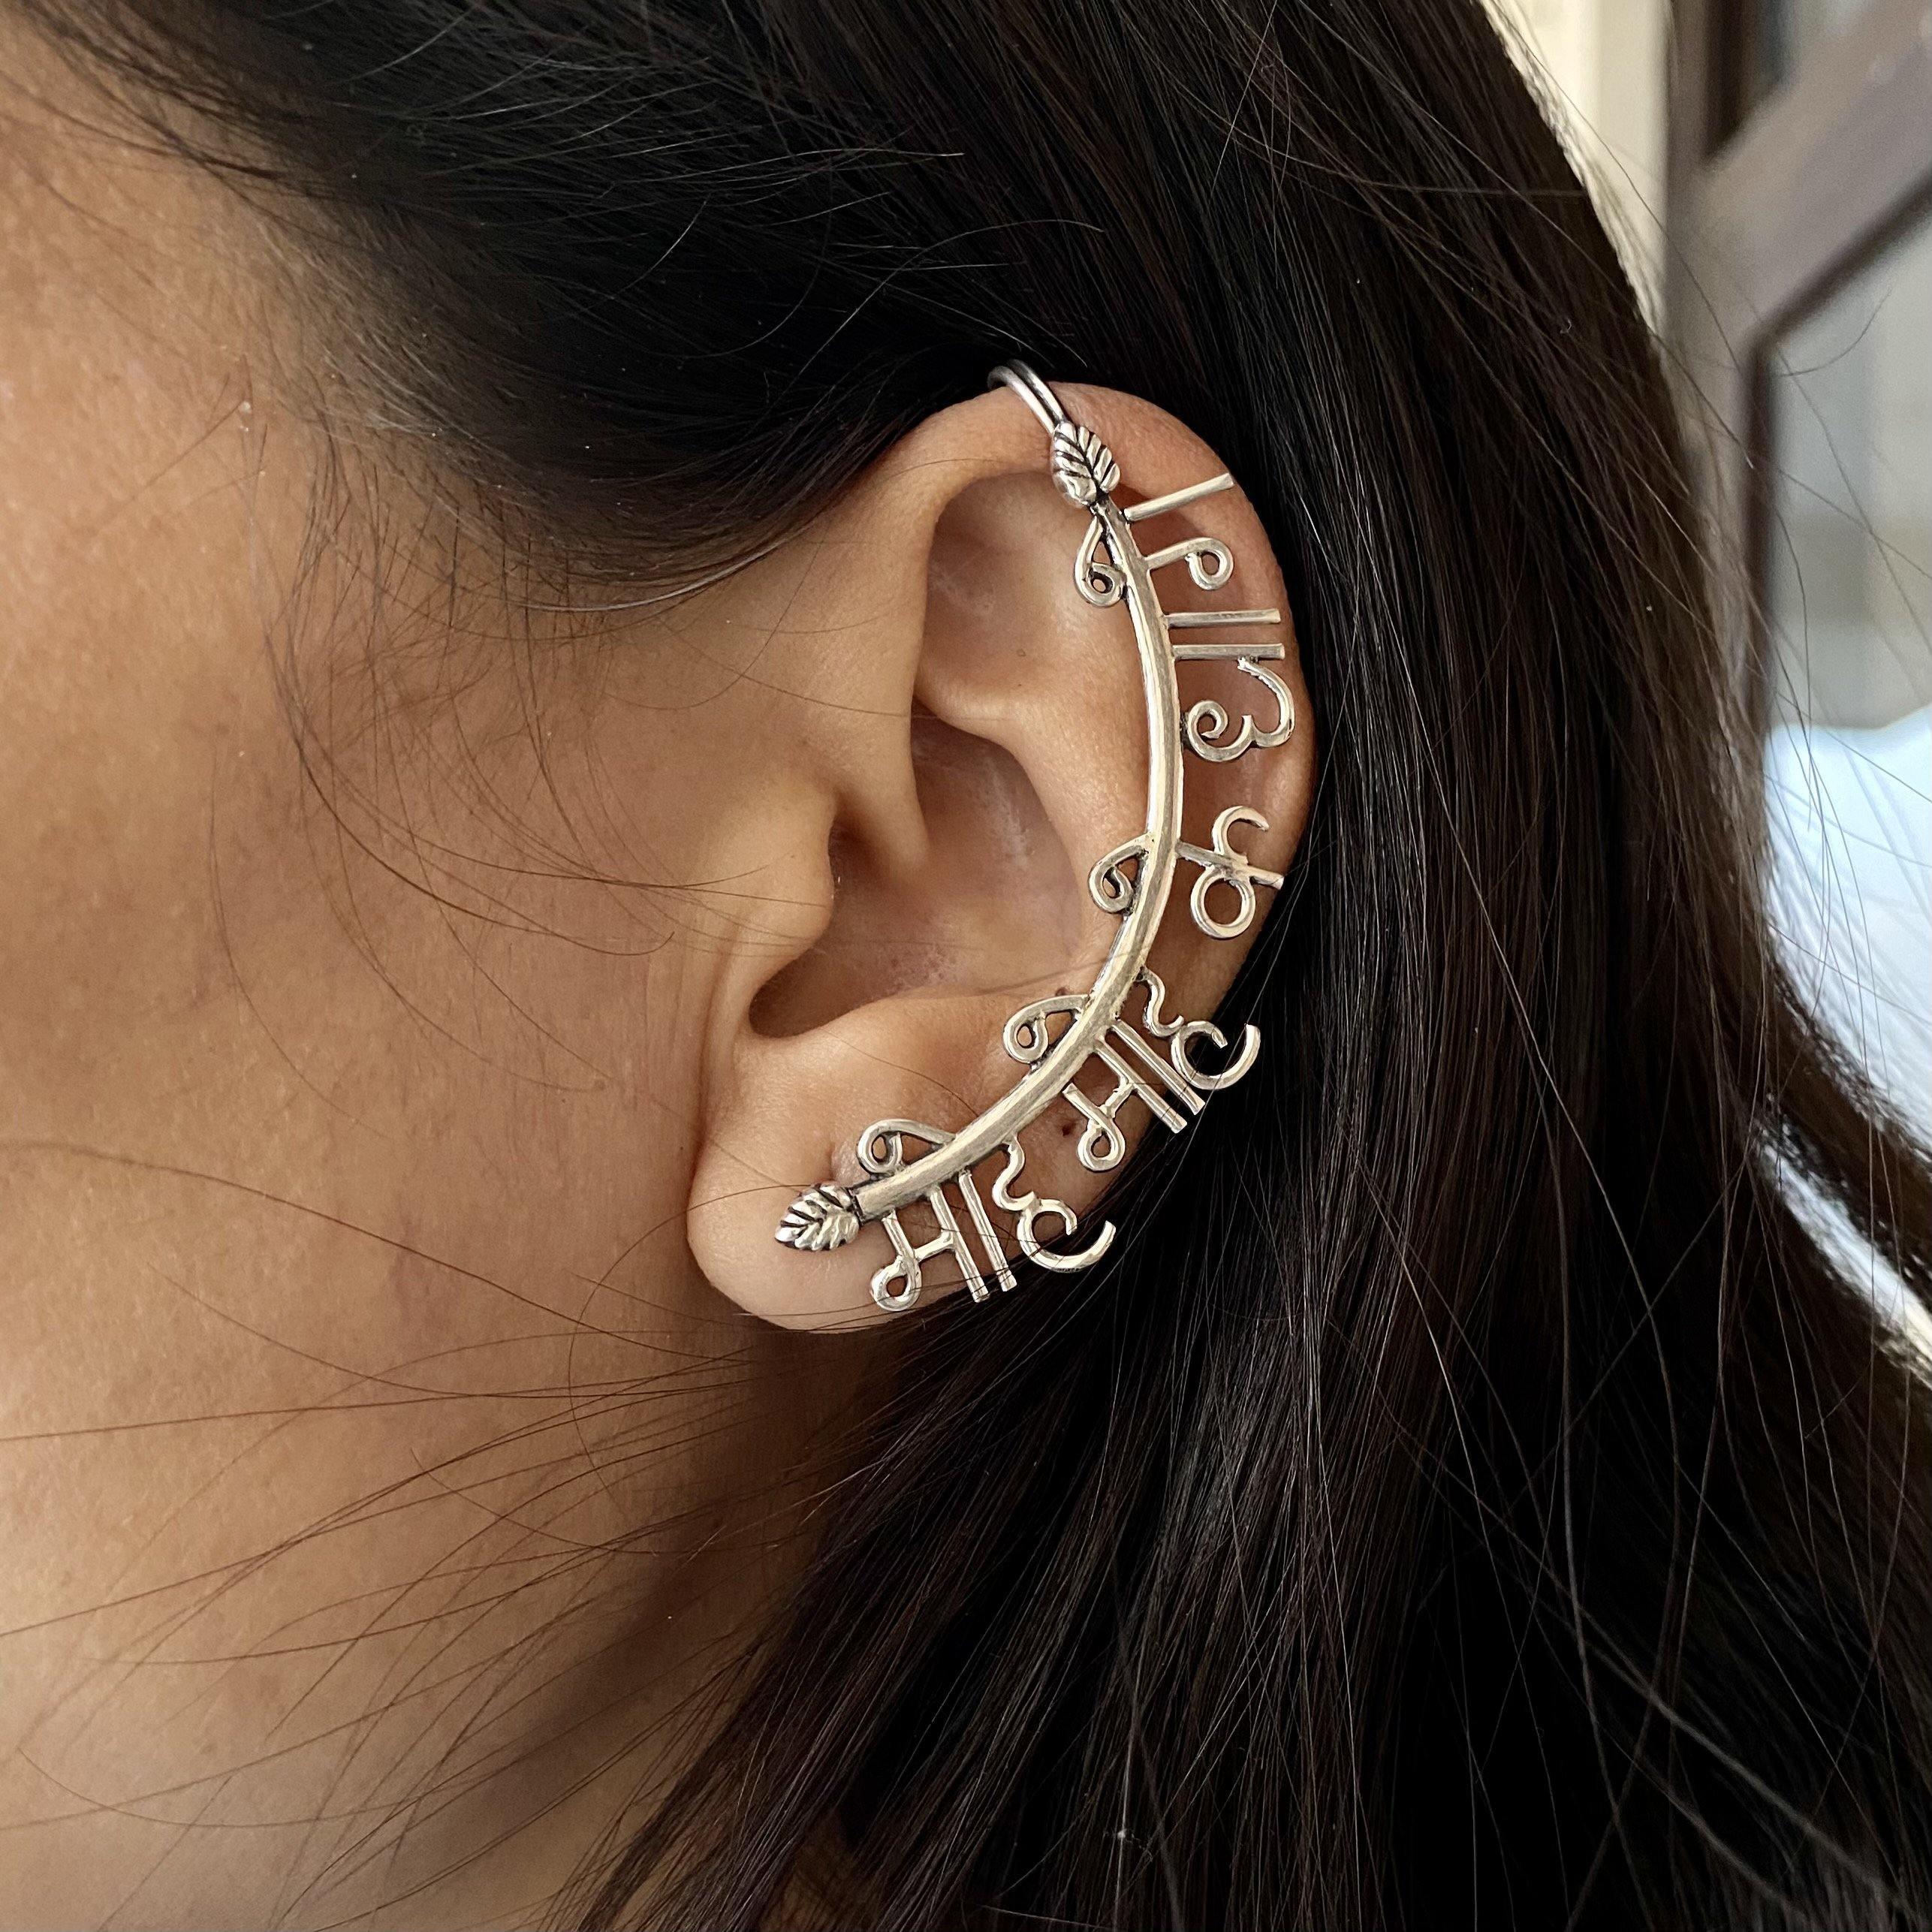 Star Ear Climber Earring - 925 Sterling Silver - Right Ear Crawler Chain  Star - FashionJunkie4Life